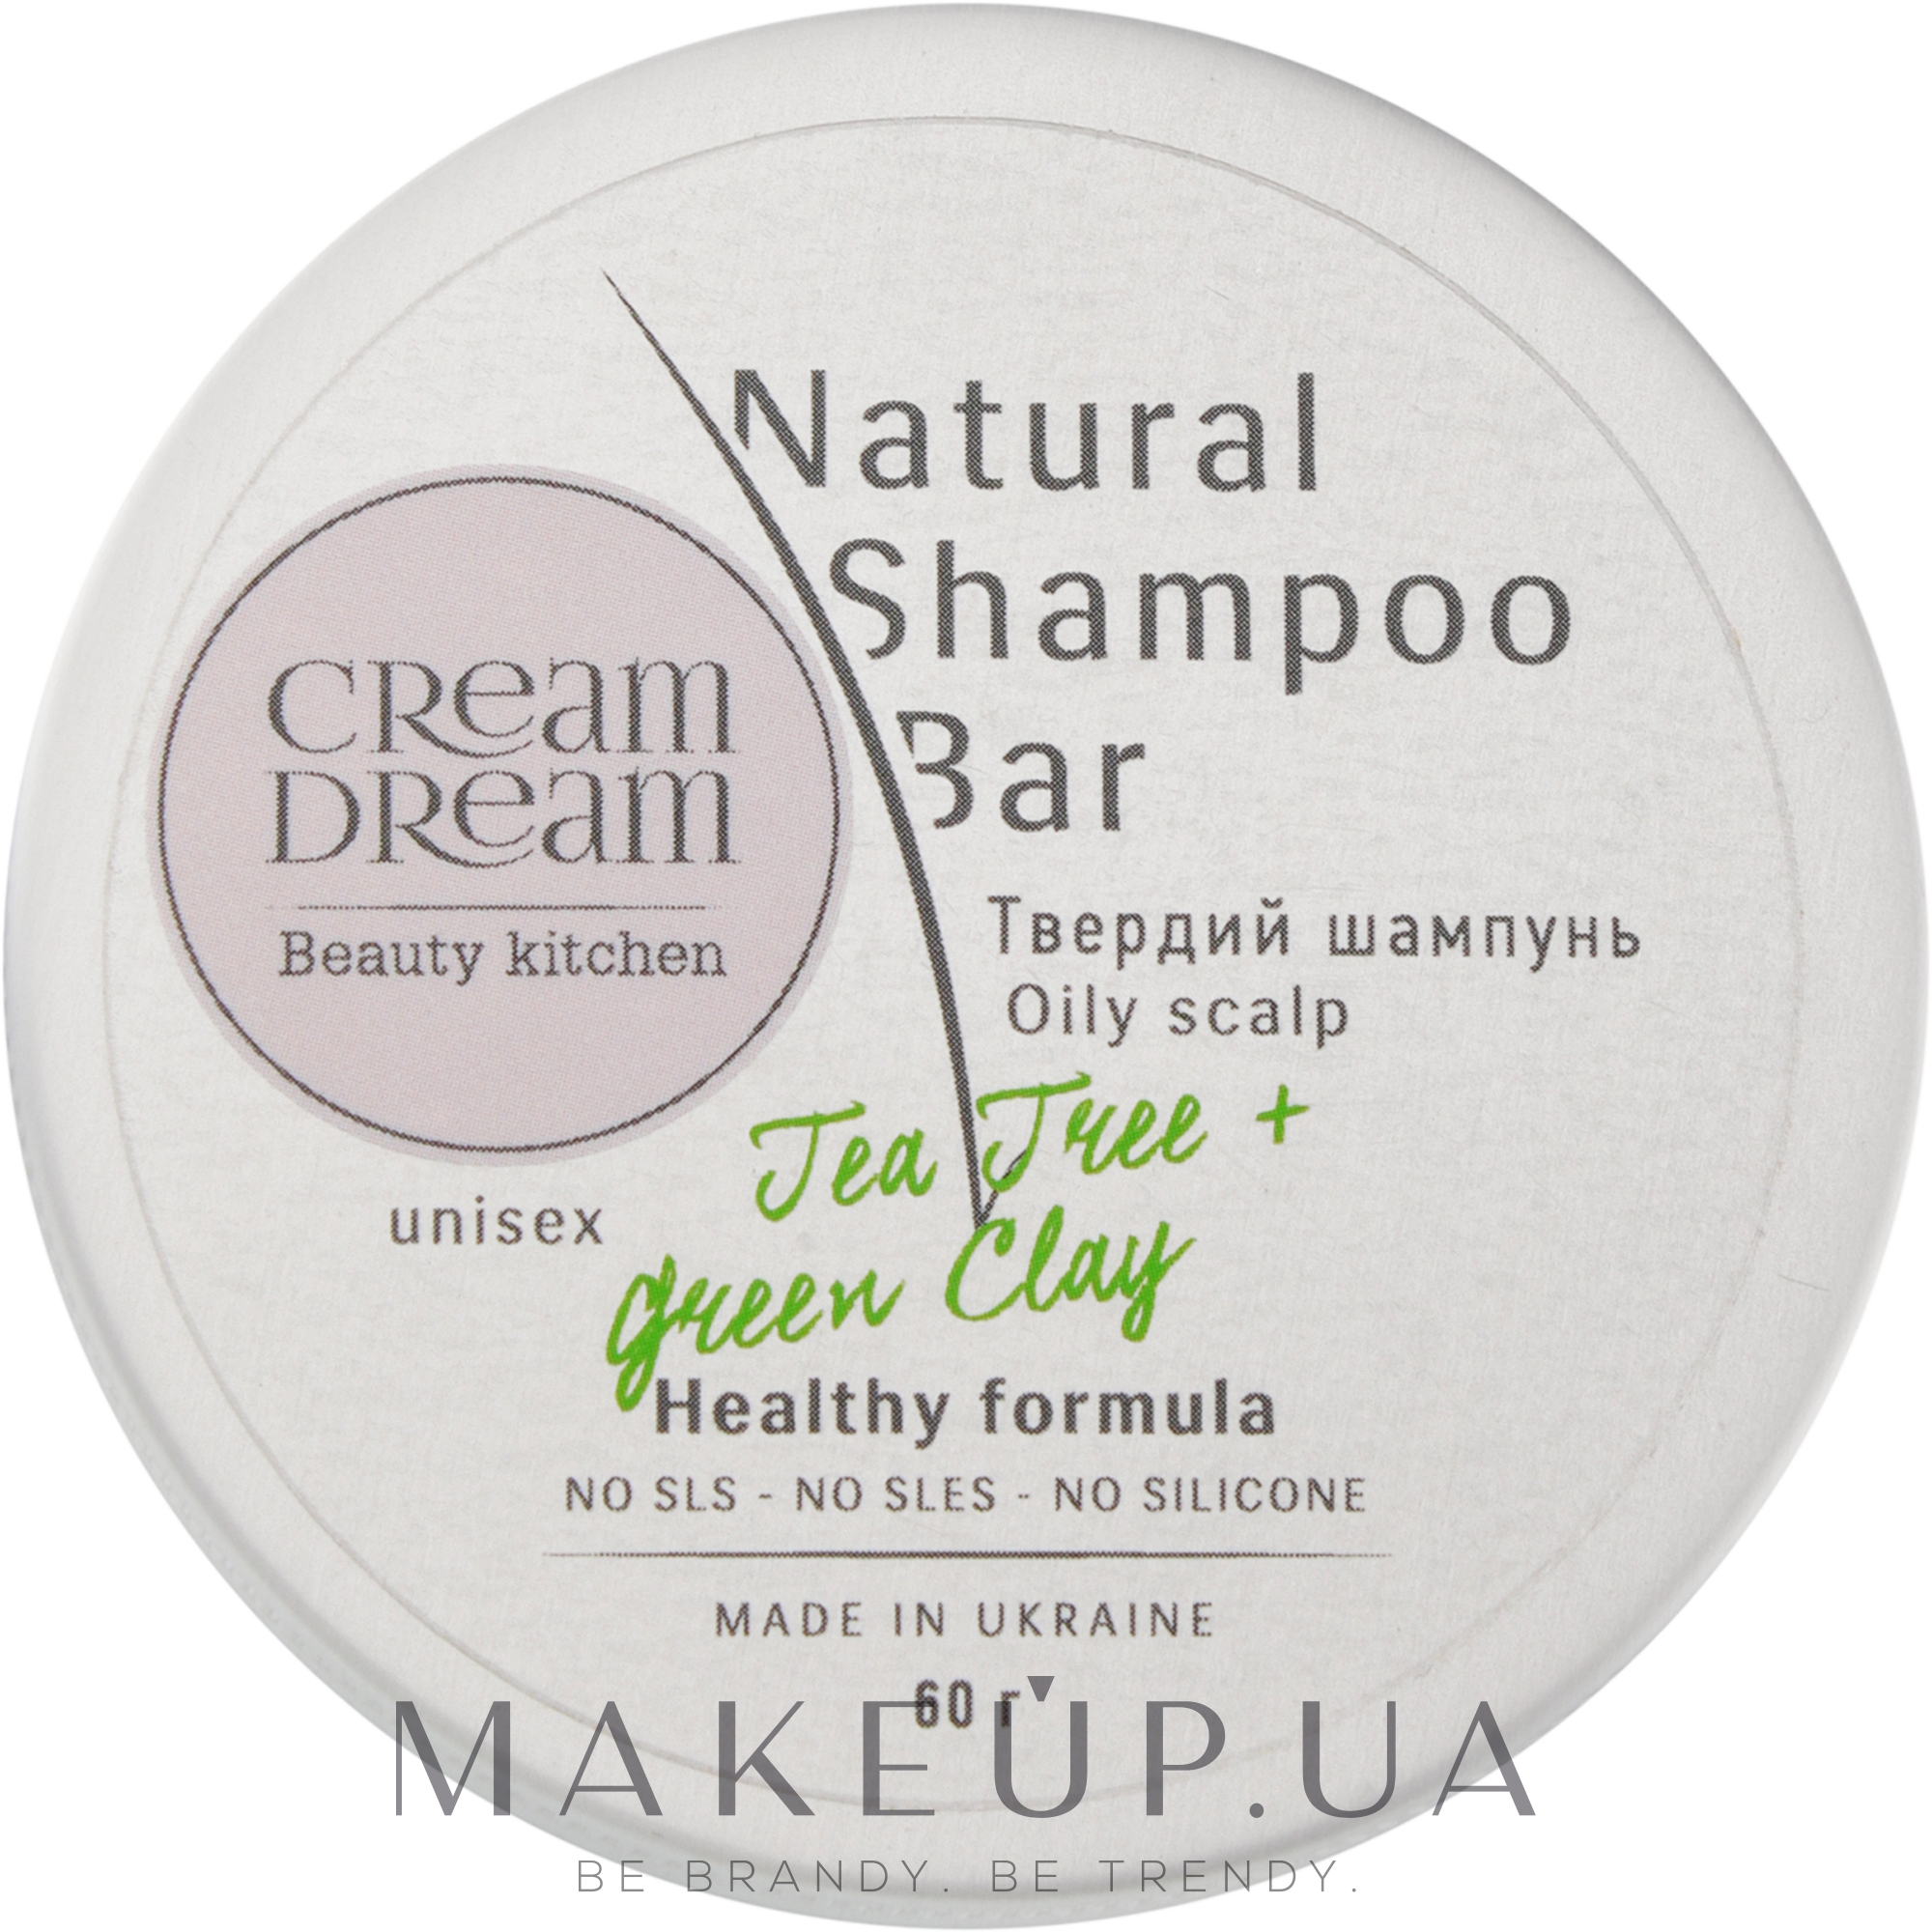 Твердий шампунь для жирної шкіри голови із зеленою глиною - Cream Dream beauty kitchen Cream Dream Natural Shampoo Bar — фото 60g